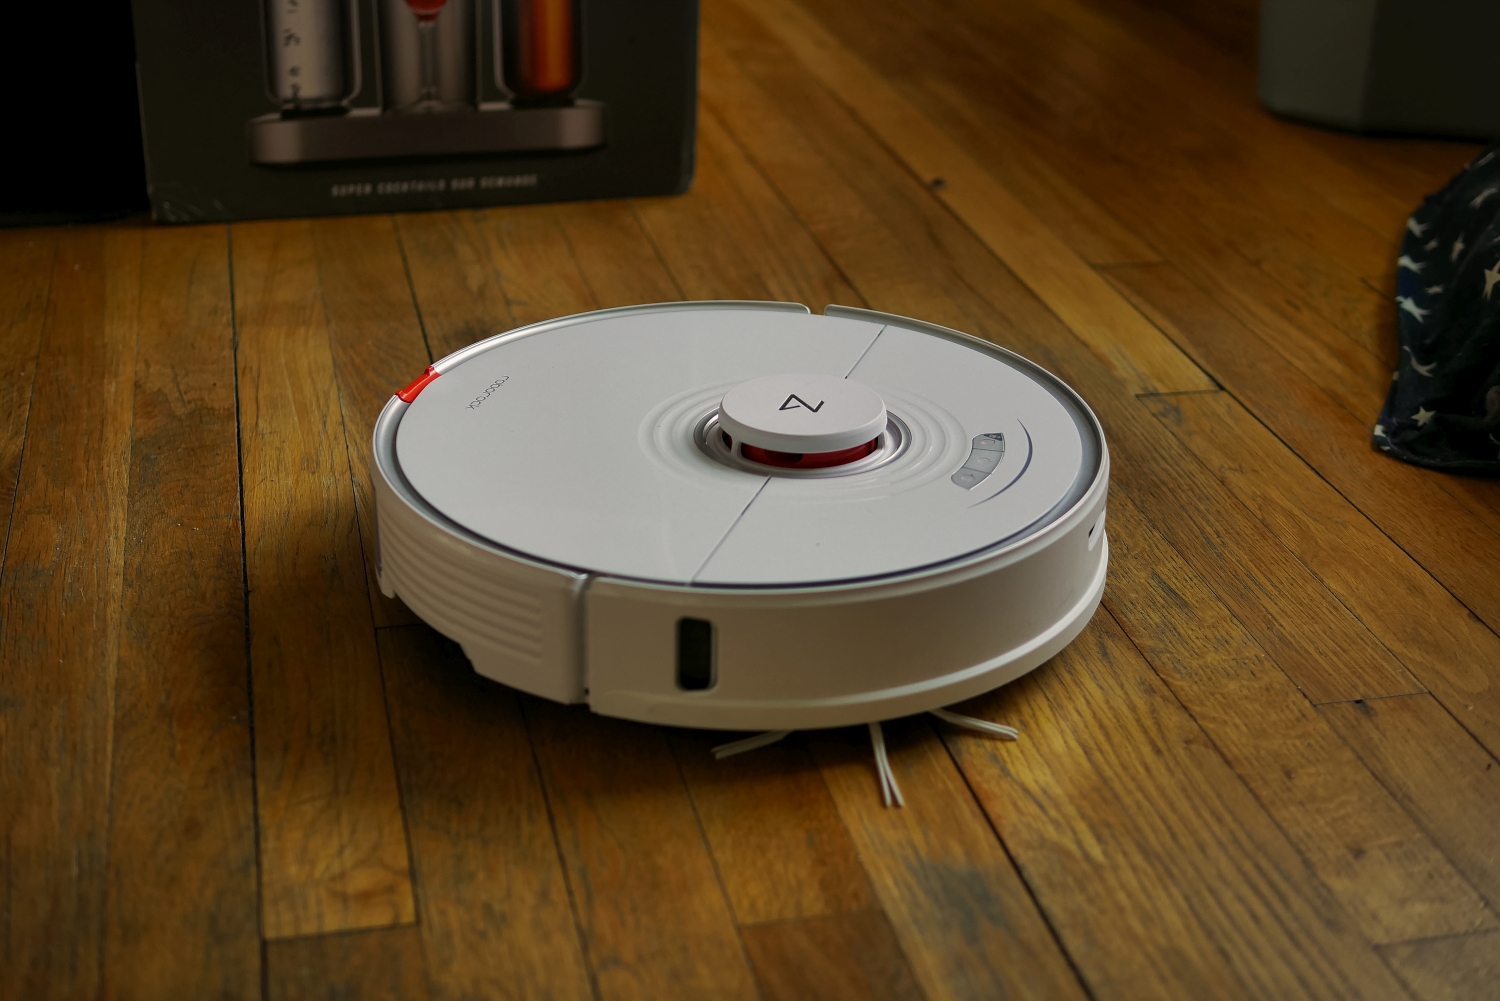 Roborock S7 Plus robot vacuum review: a solid multi-tasker - The Verge